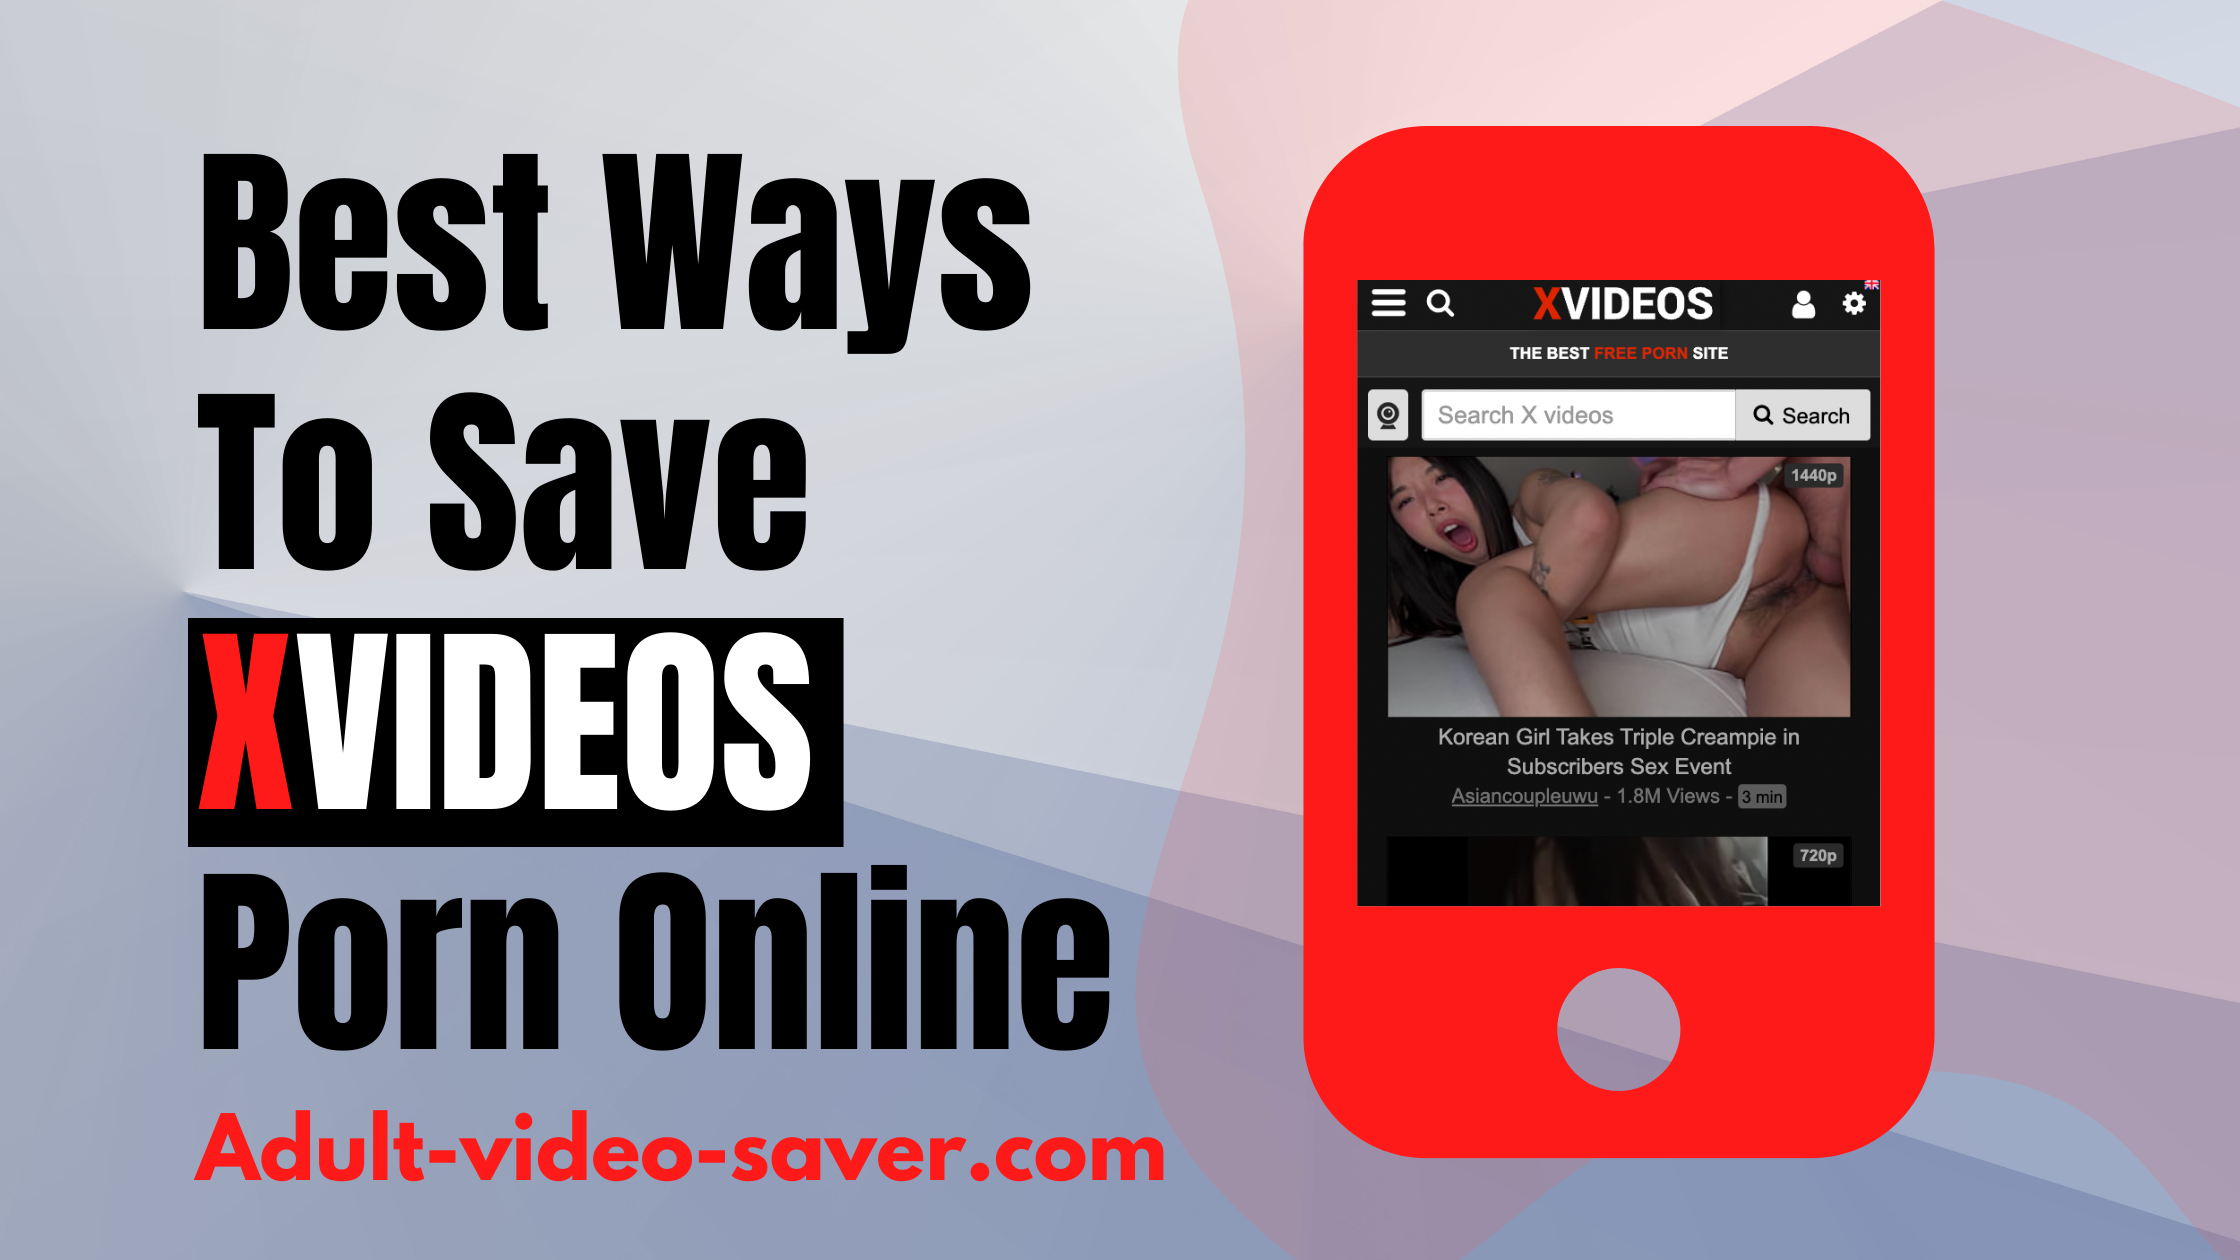 Online X Video - Best Ways To Save And Organize Porn Online